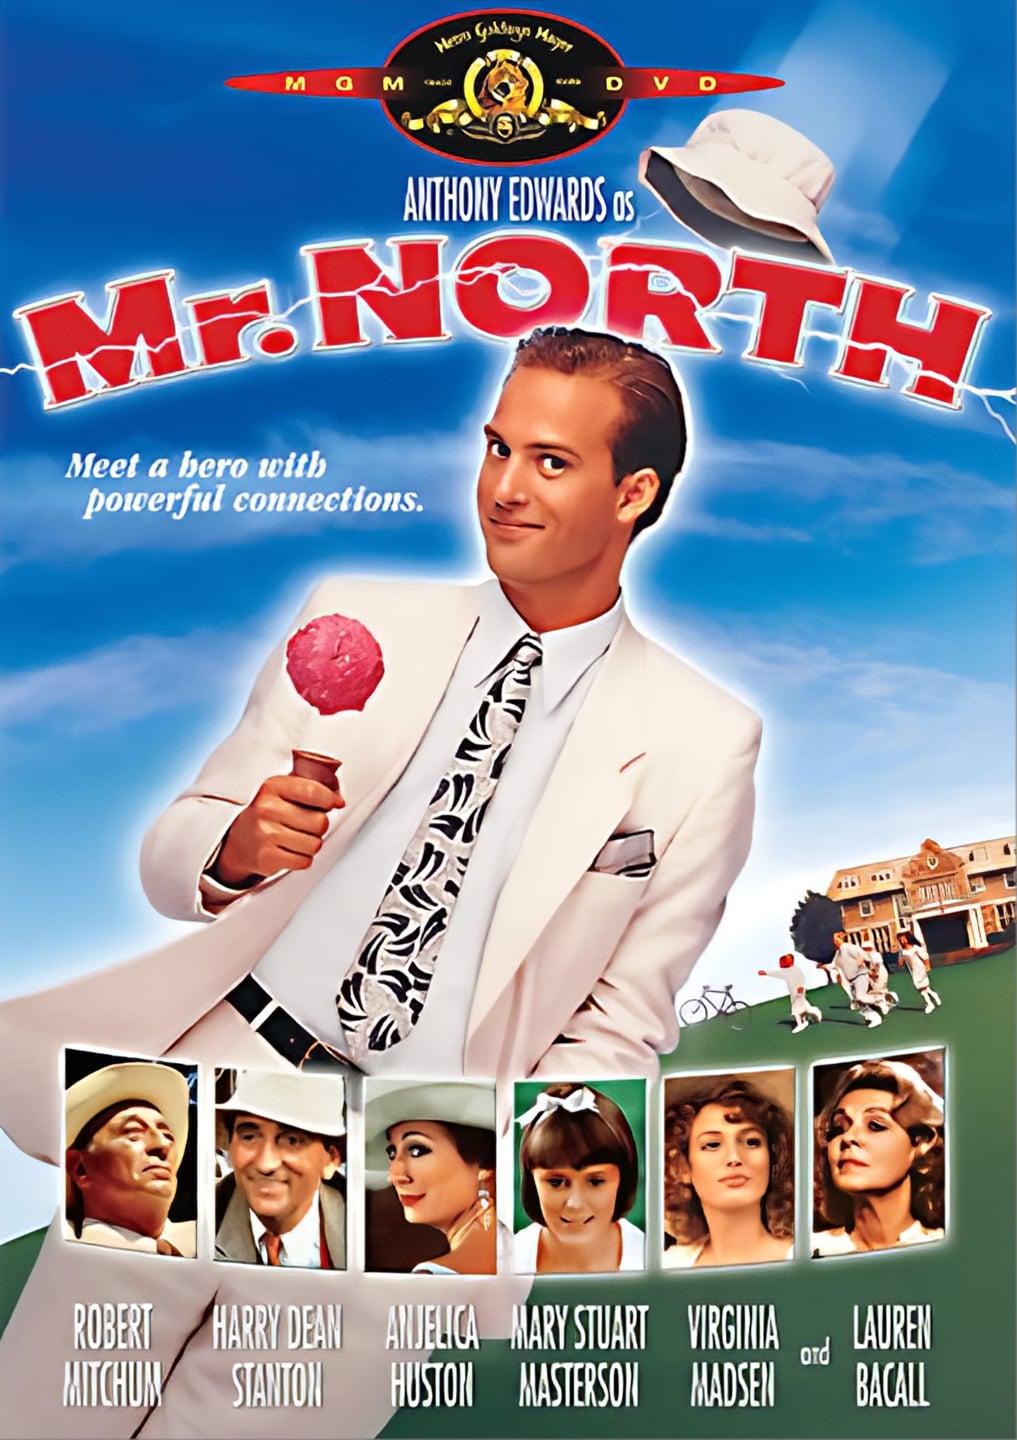 Mr. North poster